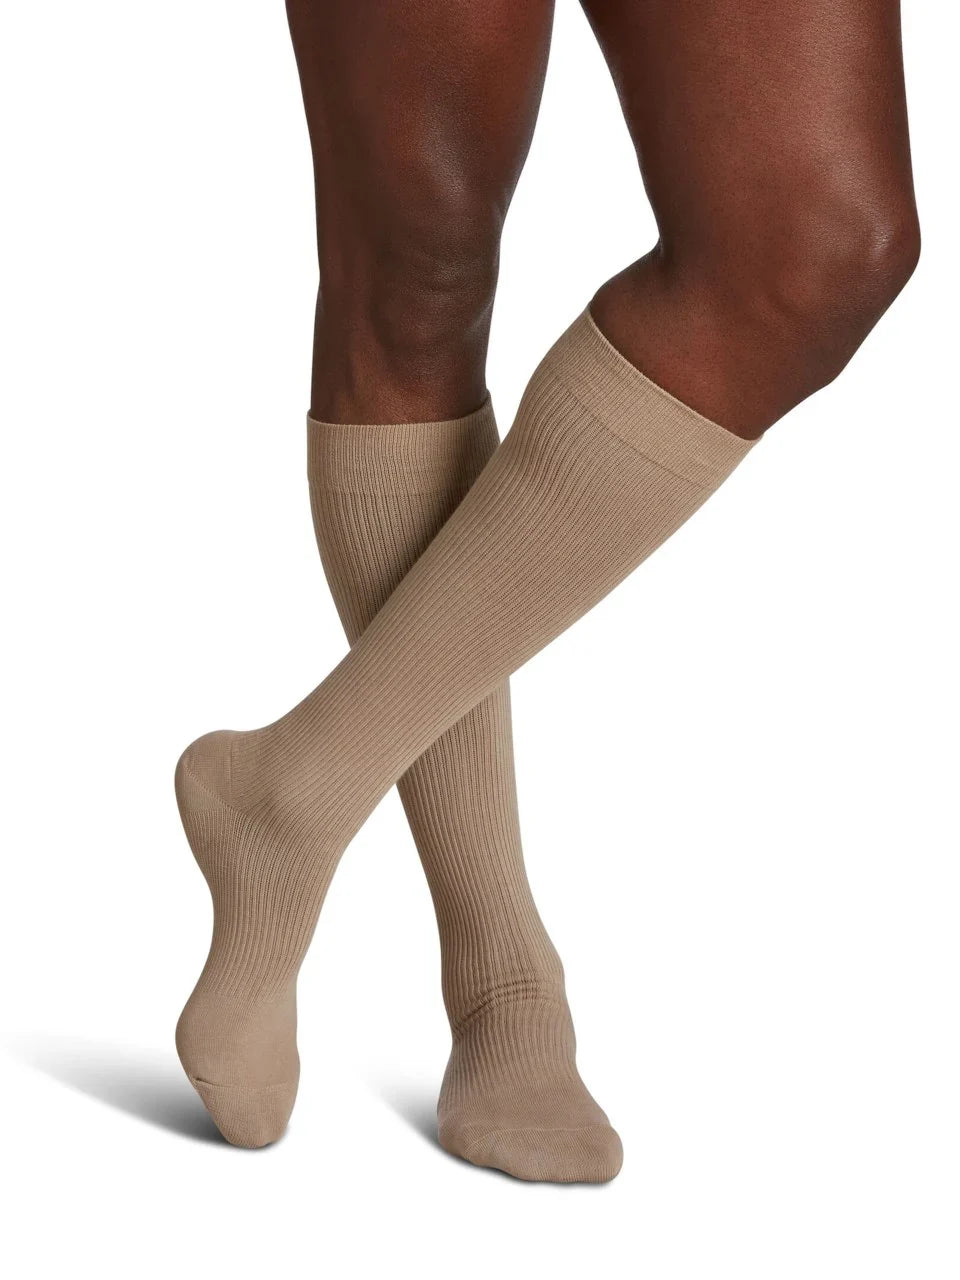 Sigvaris 180 Casual Cotton Compression Socks 15-20 mmHg Calf High For Men Closed Toe